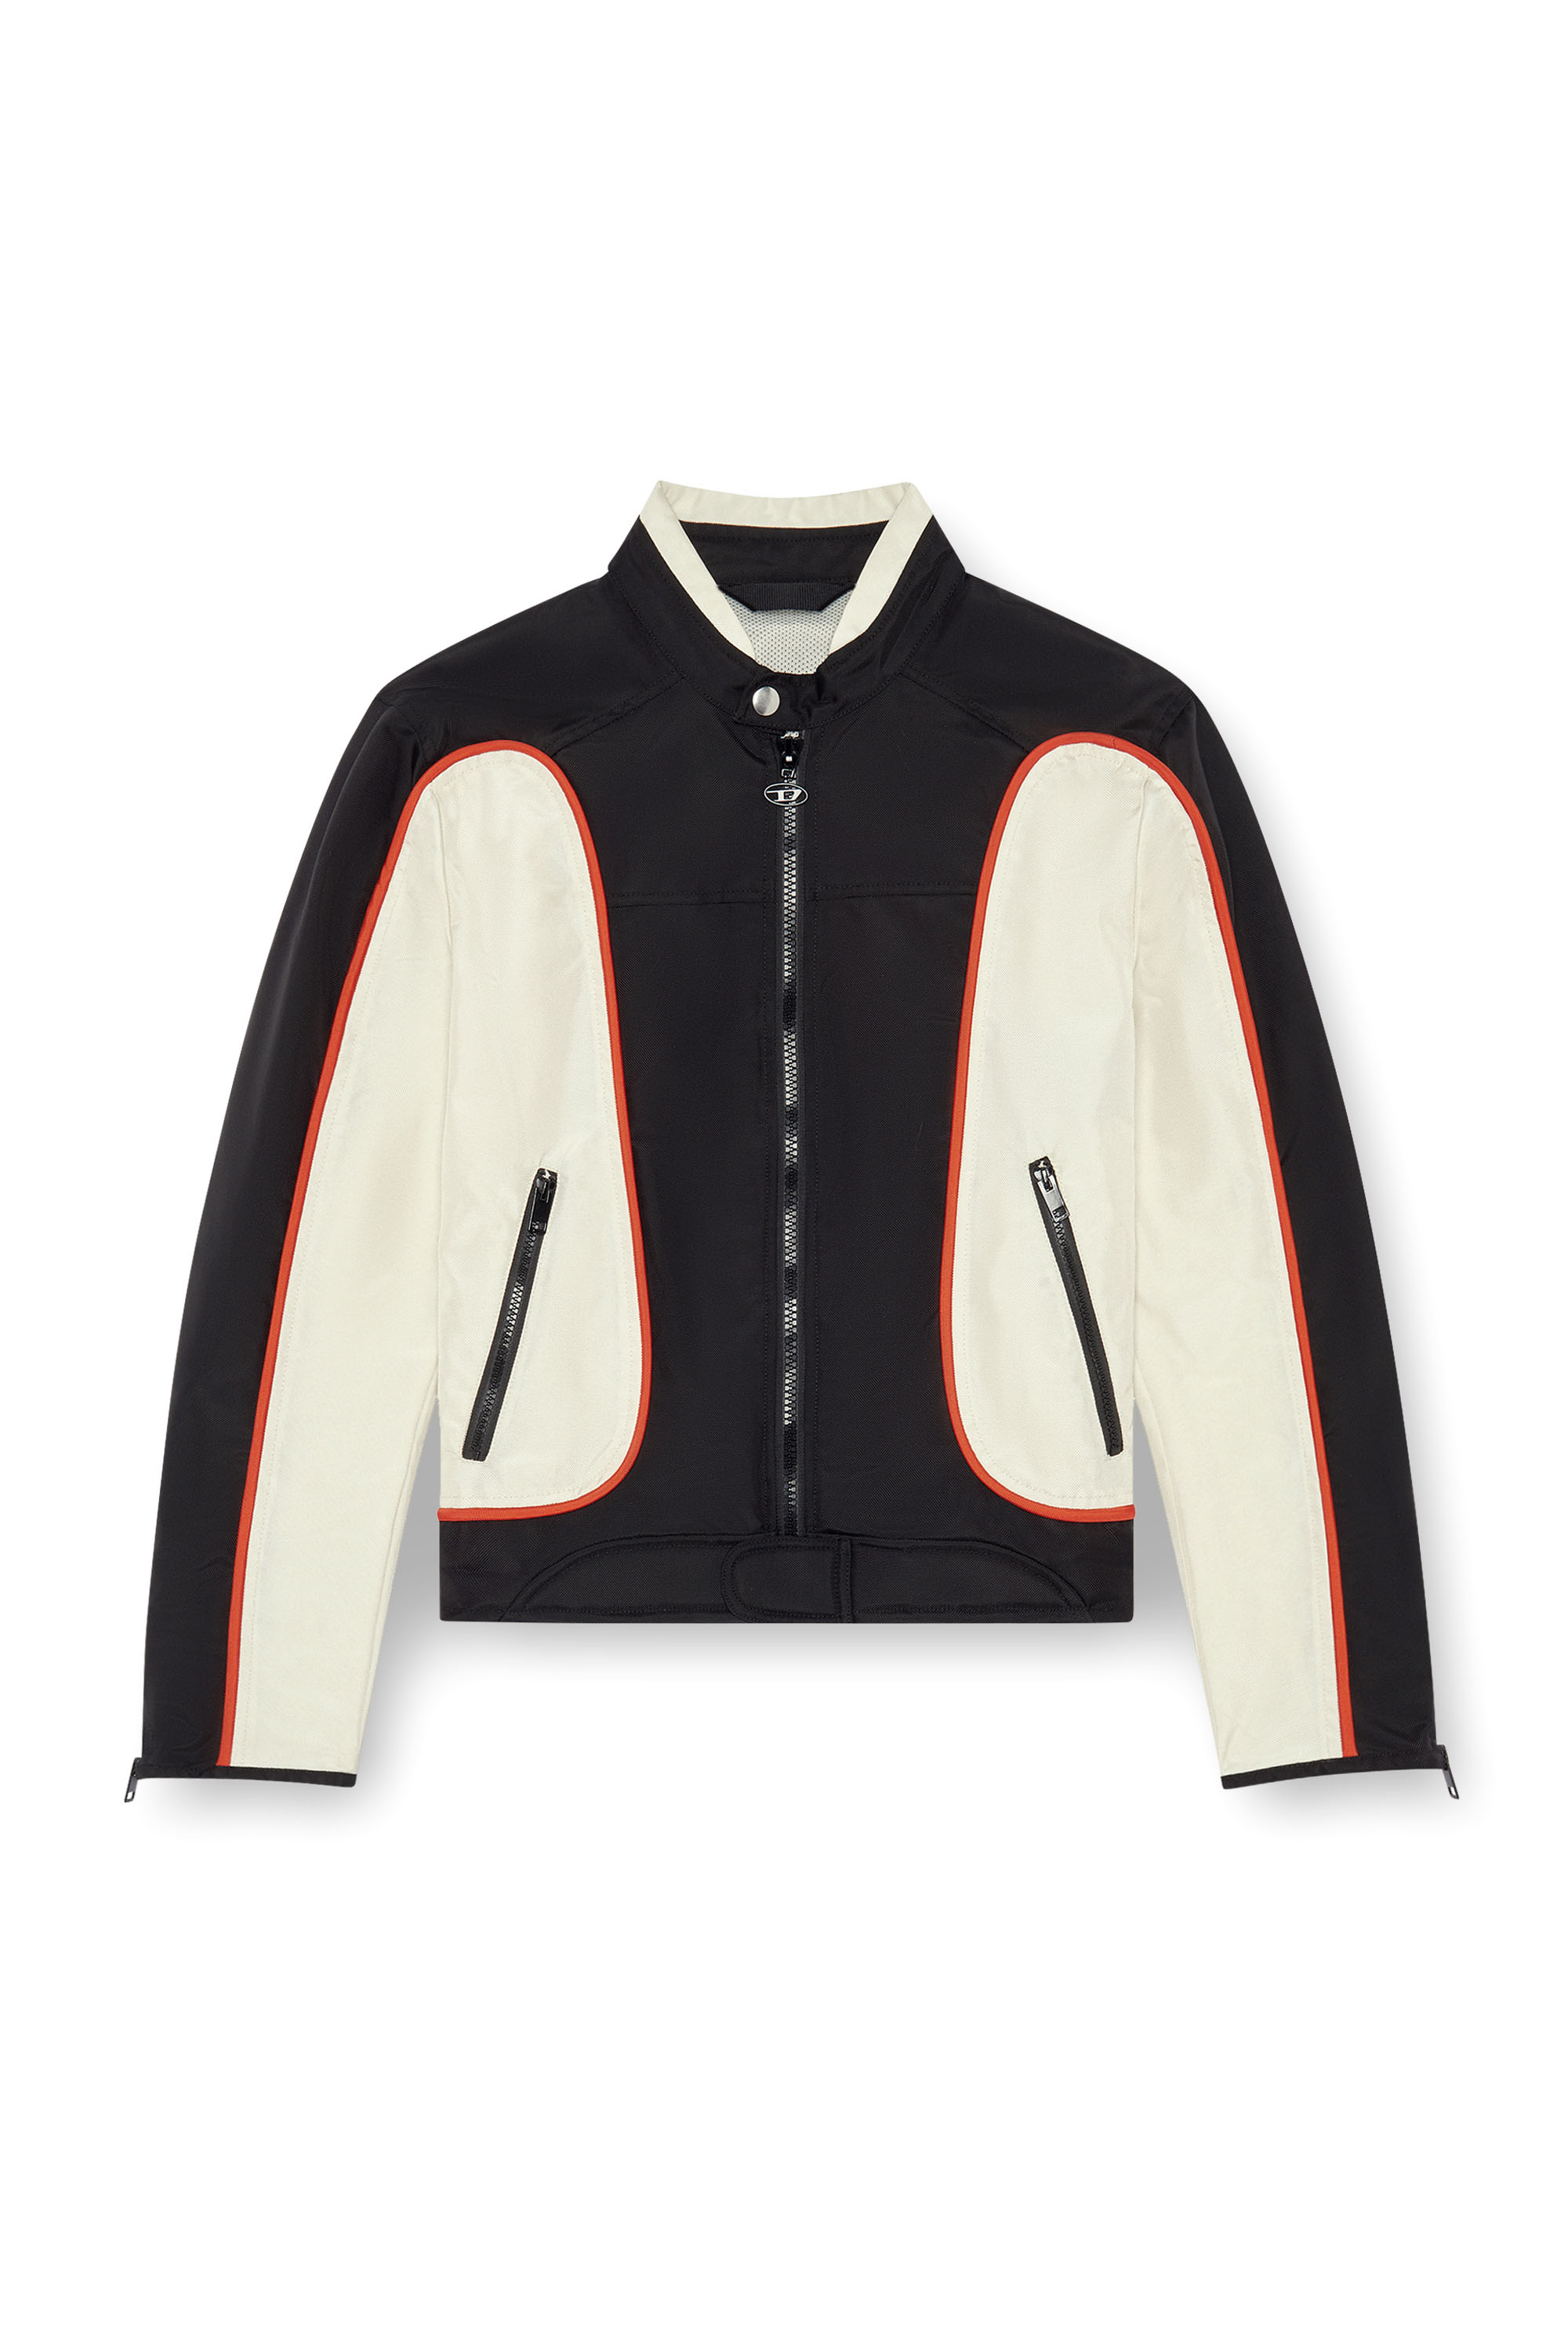 Diesel - J-BLINK, Man Biker jacket in colour-block nylon in Multicolor - Image 3